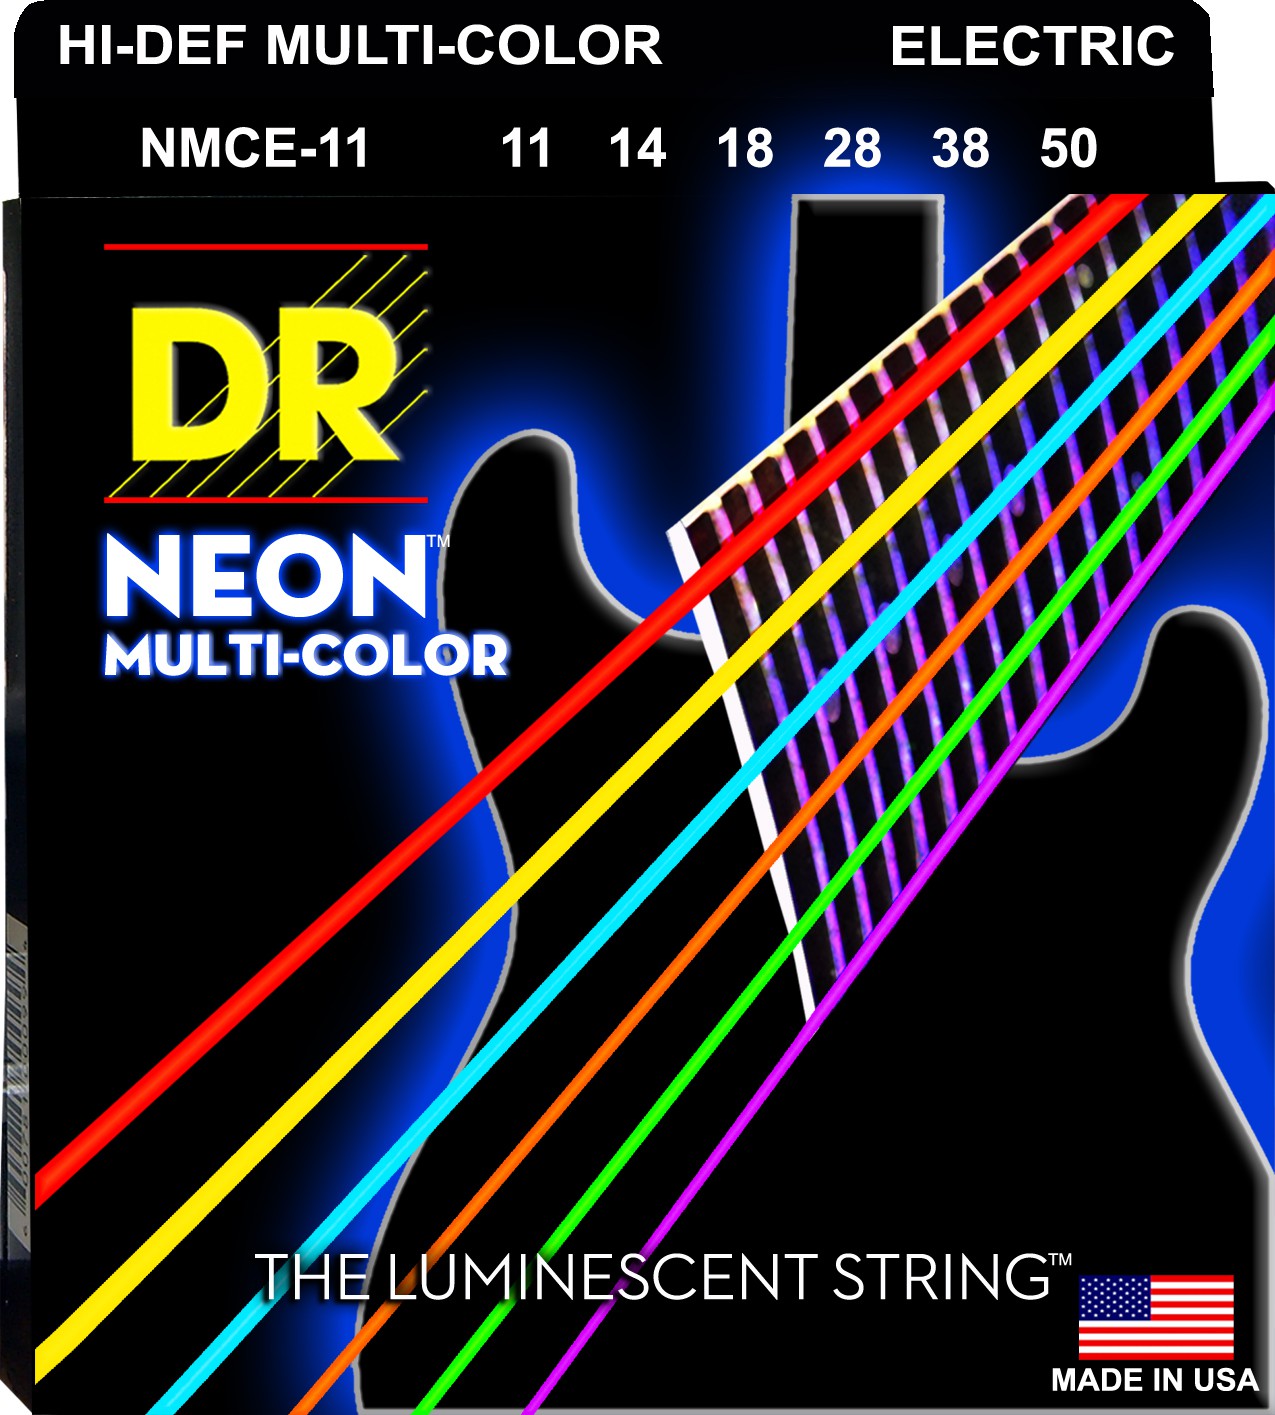 DR NEON Hi-Def Multi-Color - MCE-11 - struny do gitary elektrycznej Set, Heavy, .011-.050